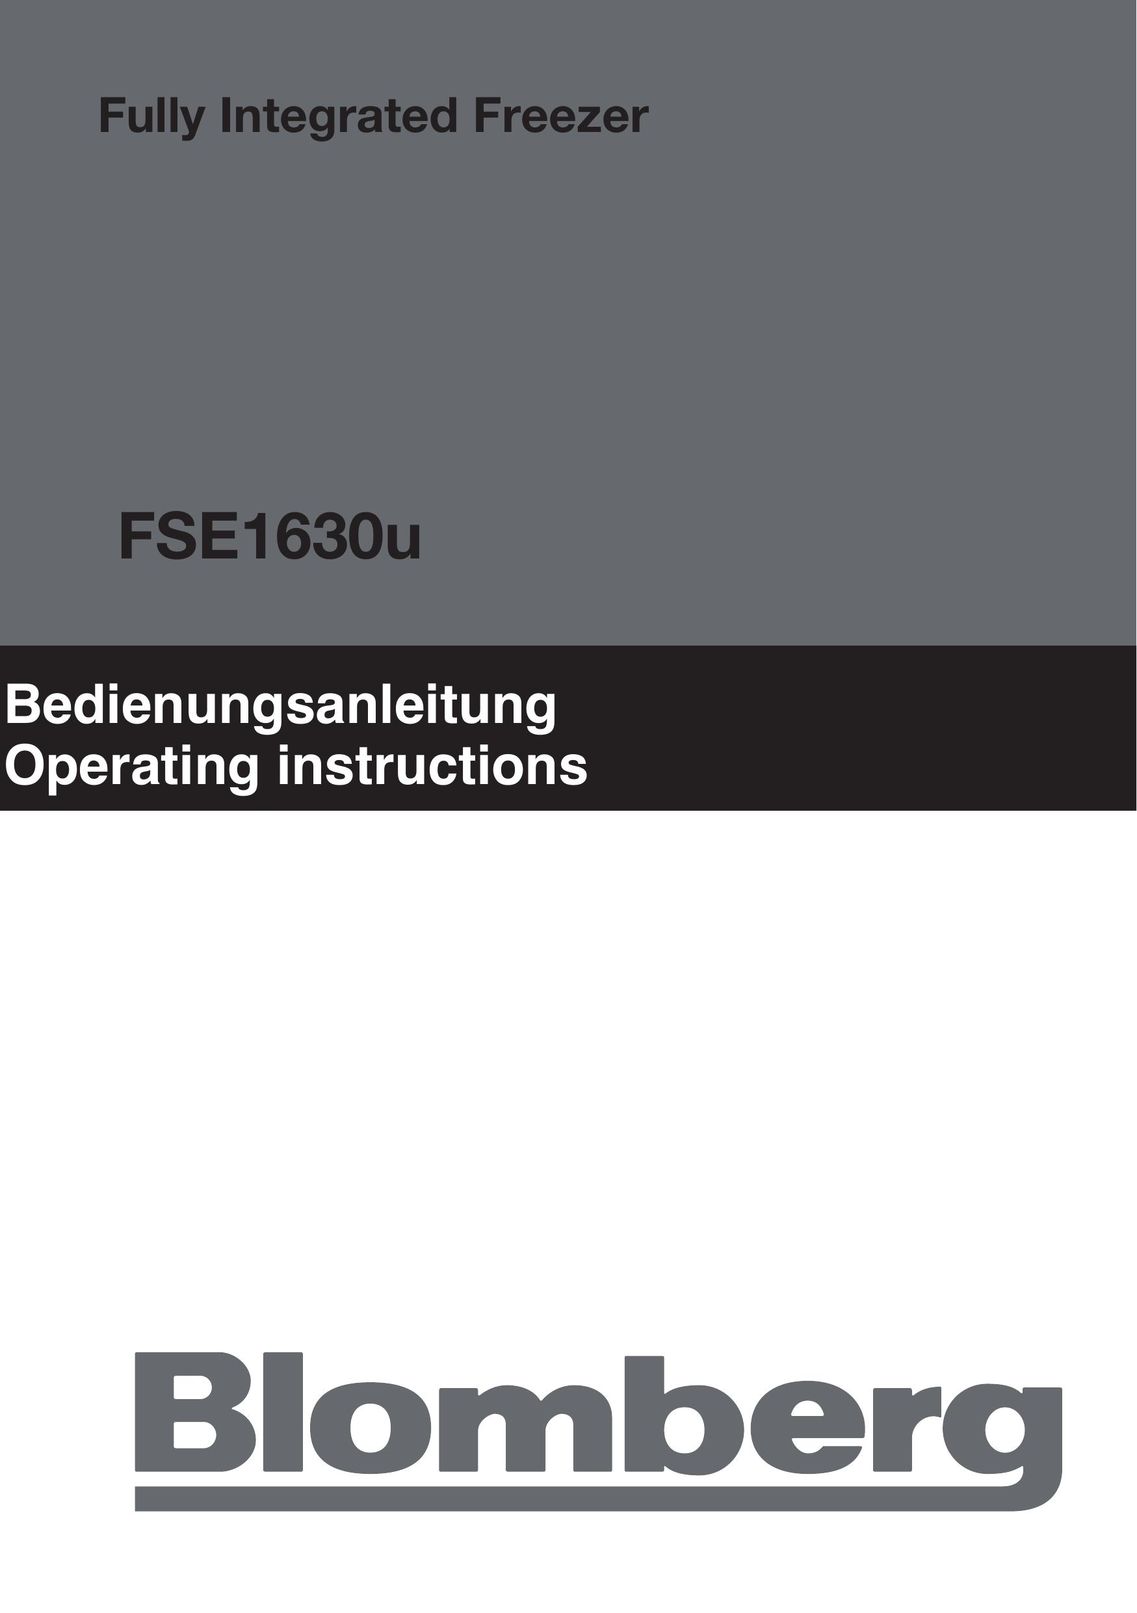 Blomberg FSE1630u Freezer User Manual